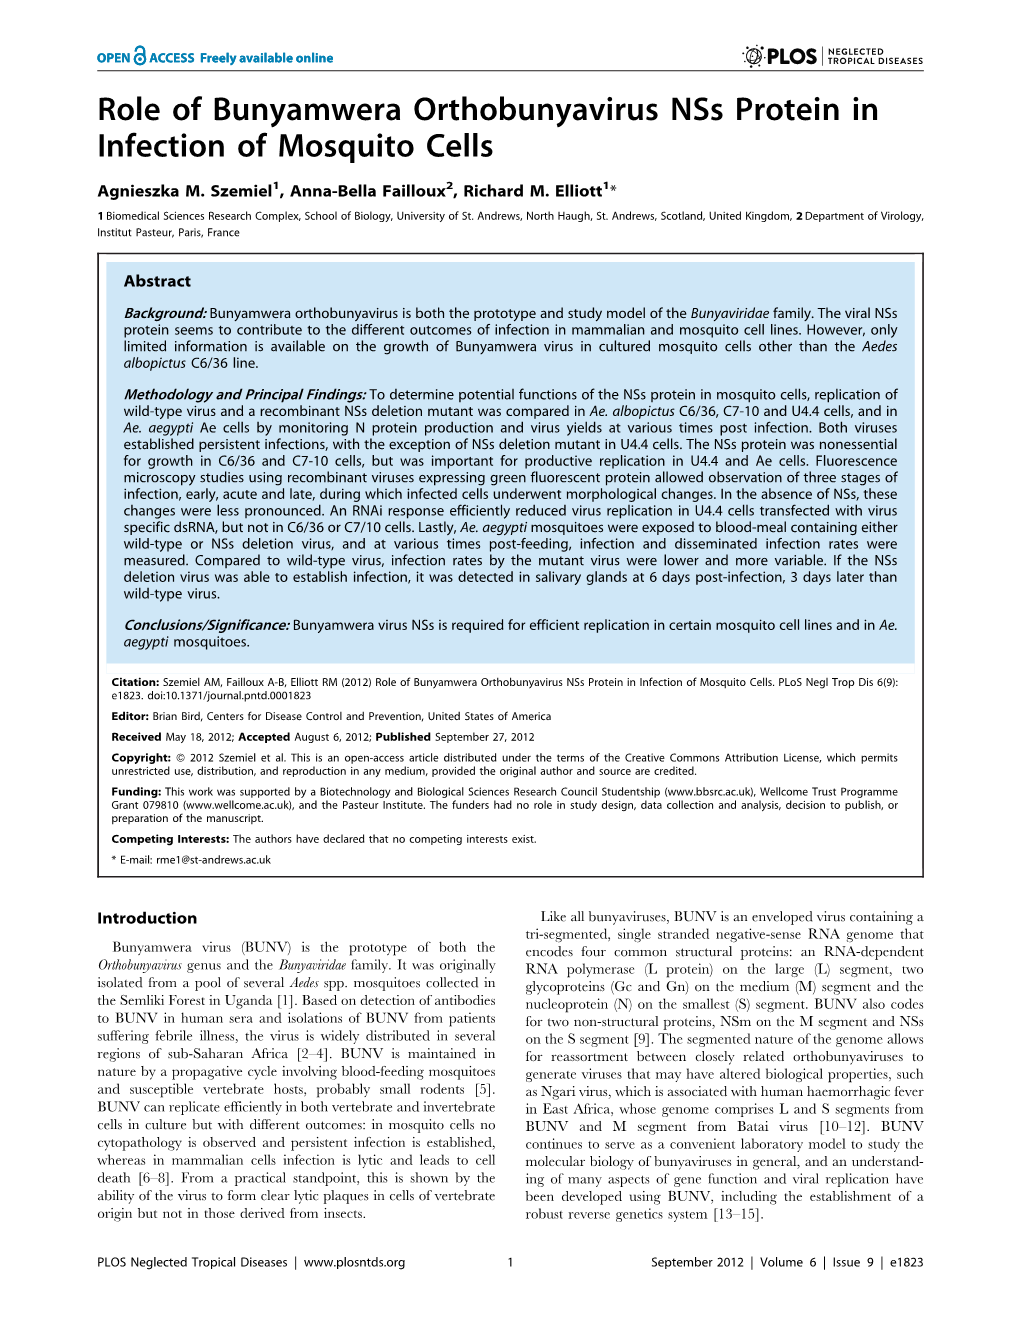 Role of Bunyamwera Orthobunyavirus Nss Protein in Infection of Mosquito Cells